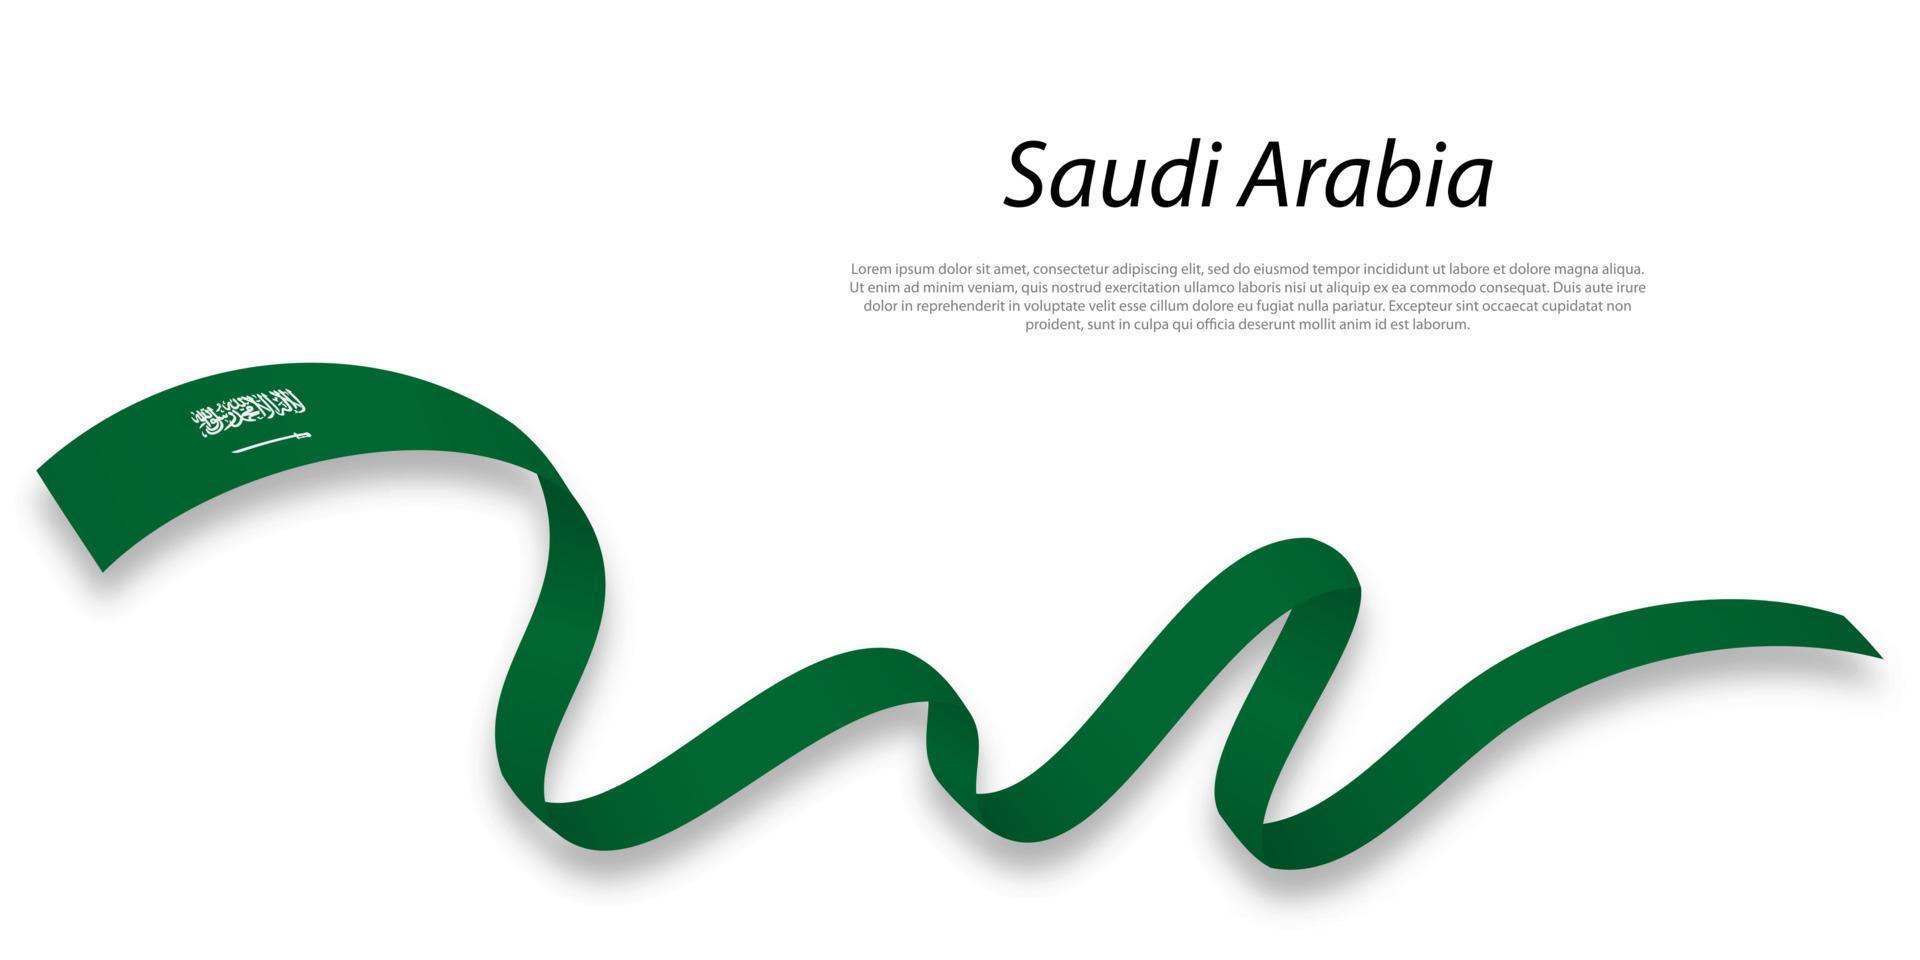 ondulación cinta o bandera con bandera de saudi arabia vector